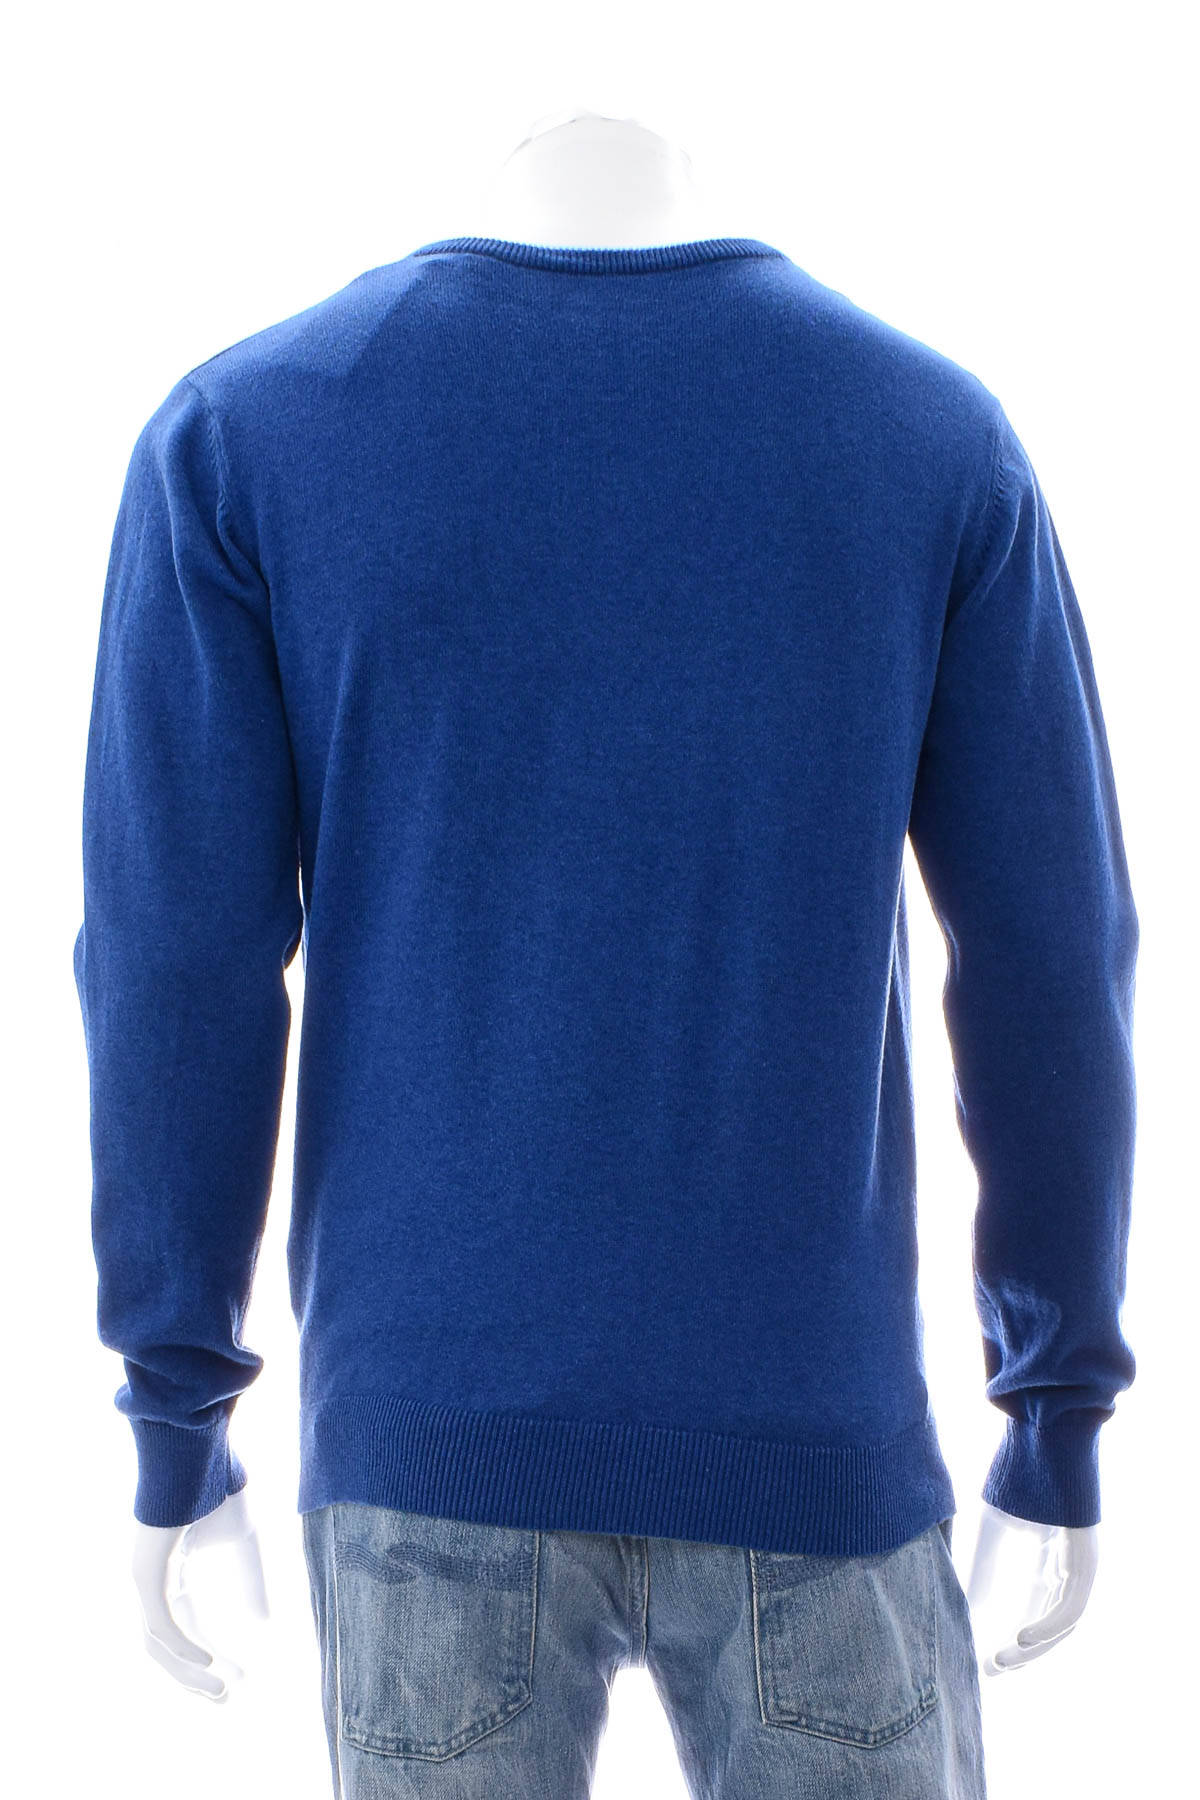 Men's sweater - 1